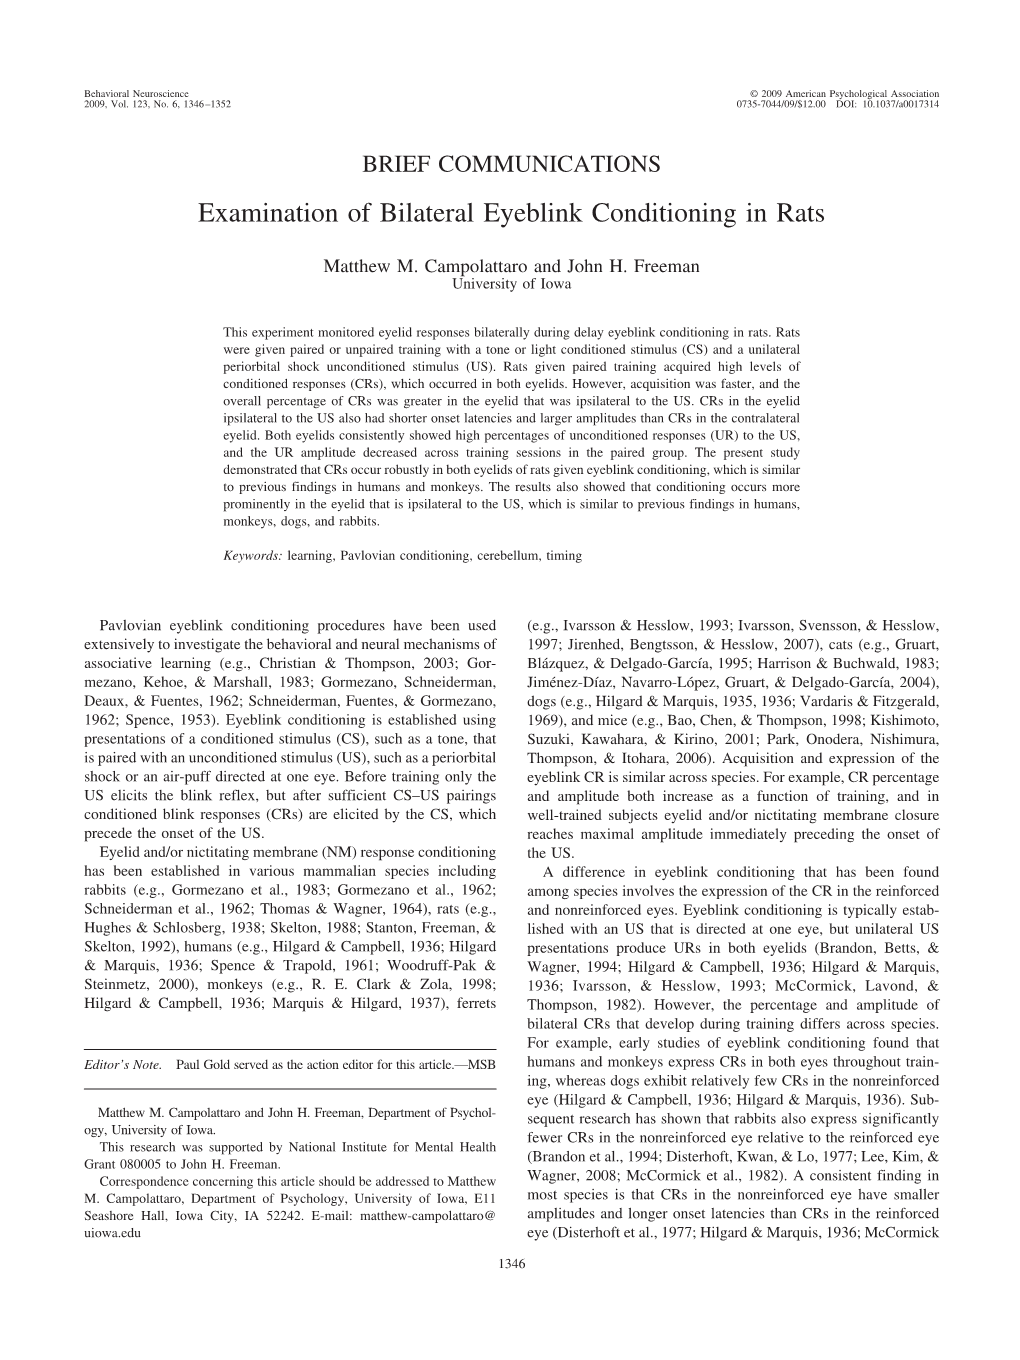 Examination of Bilateral Eyeblink Conditioning in Rats